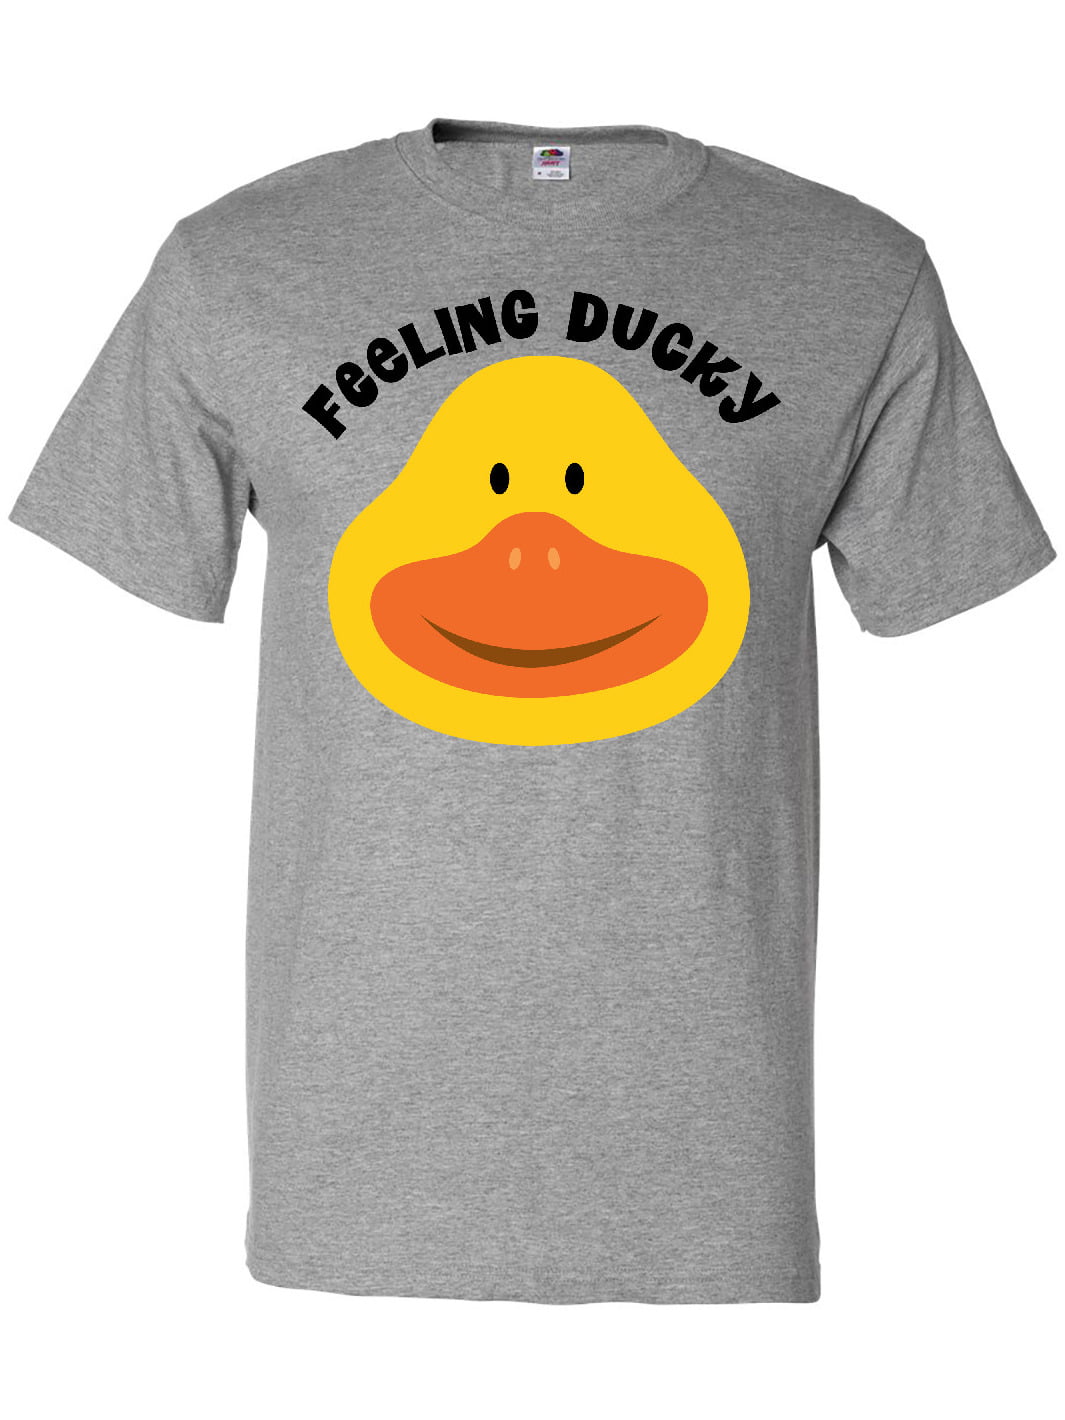 Rubber Duck Shirts